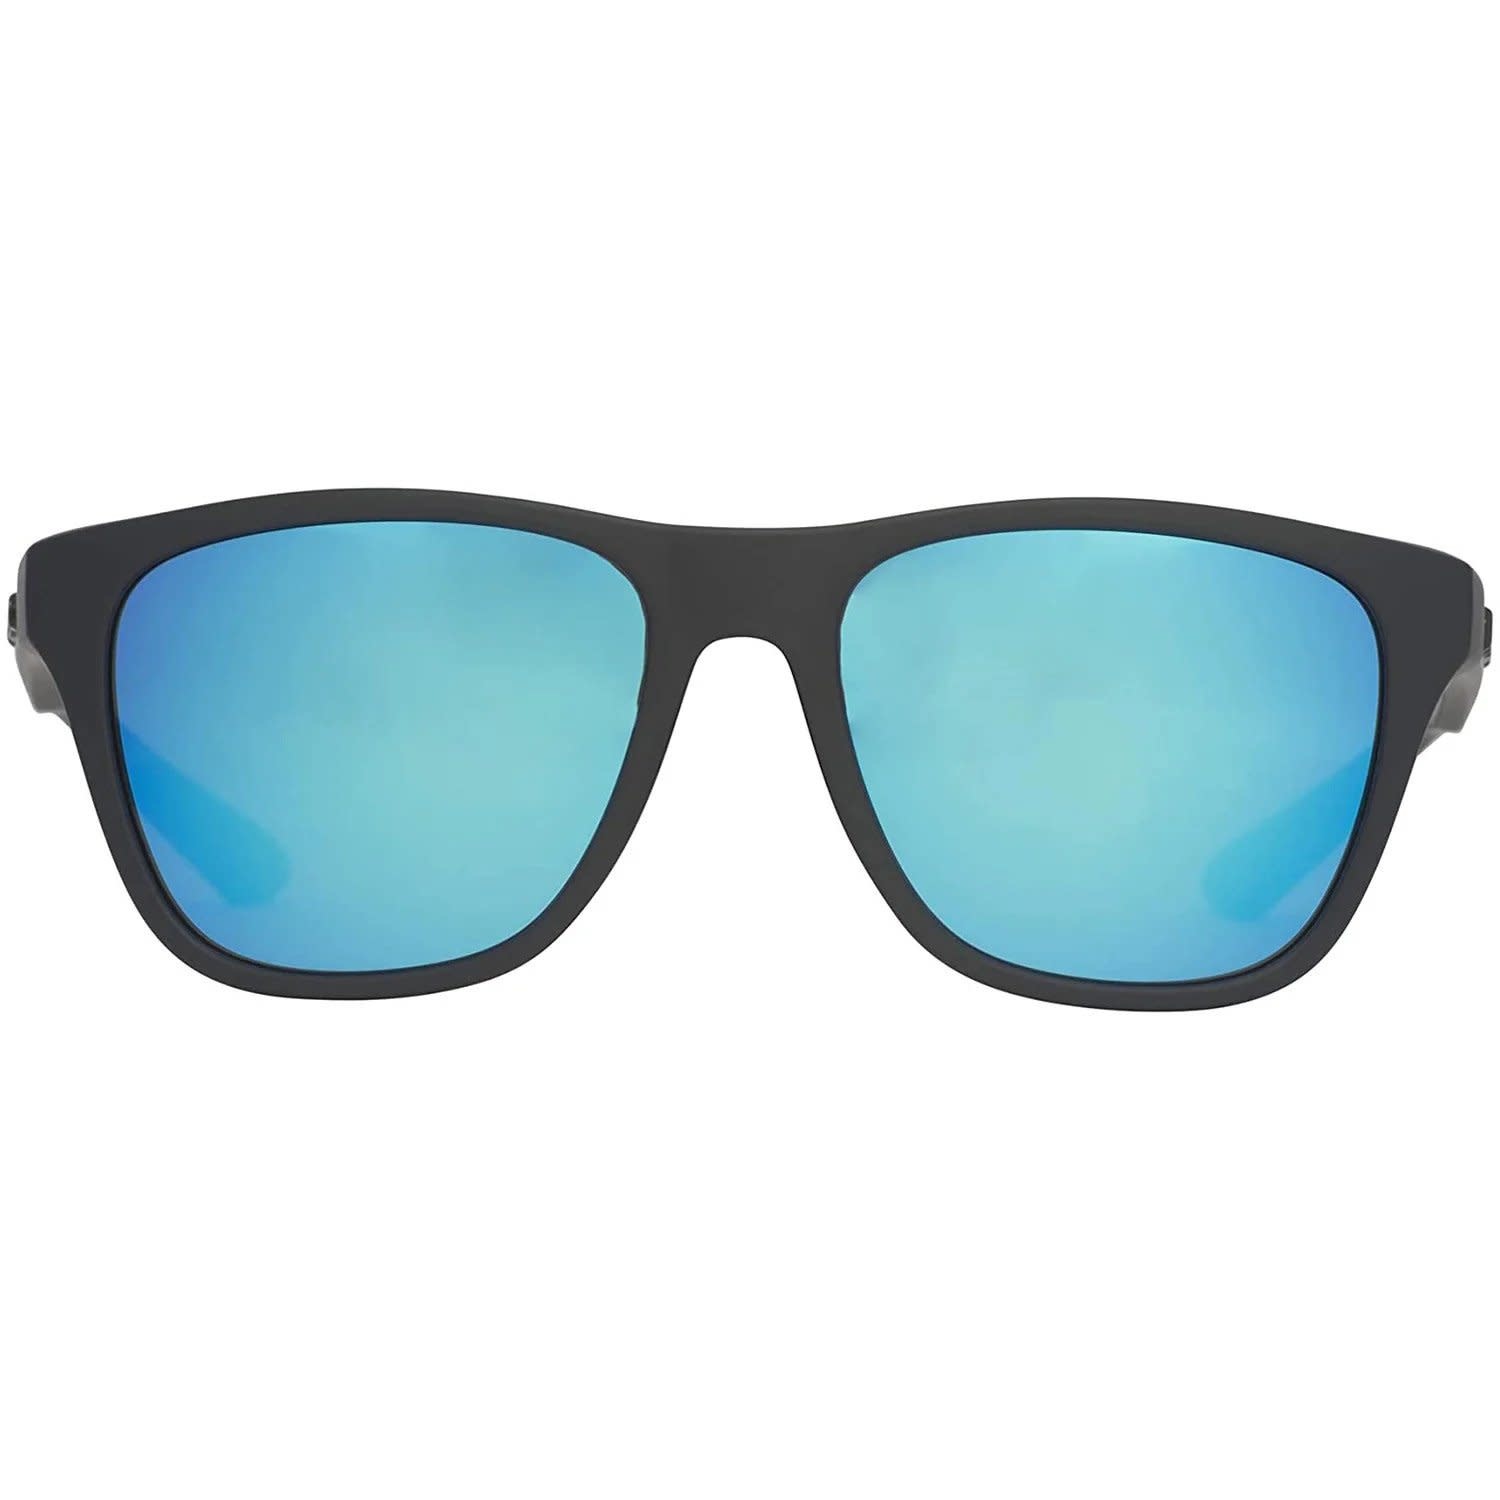 Huk Swivel Polarized Sunglasses, Blue Mirror Lens - Bronson